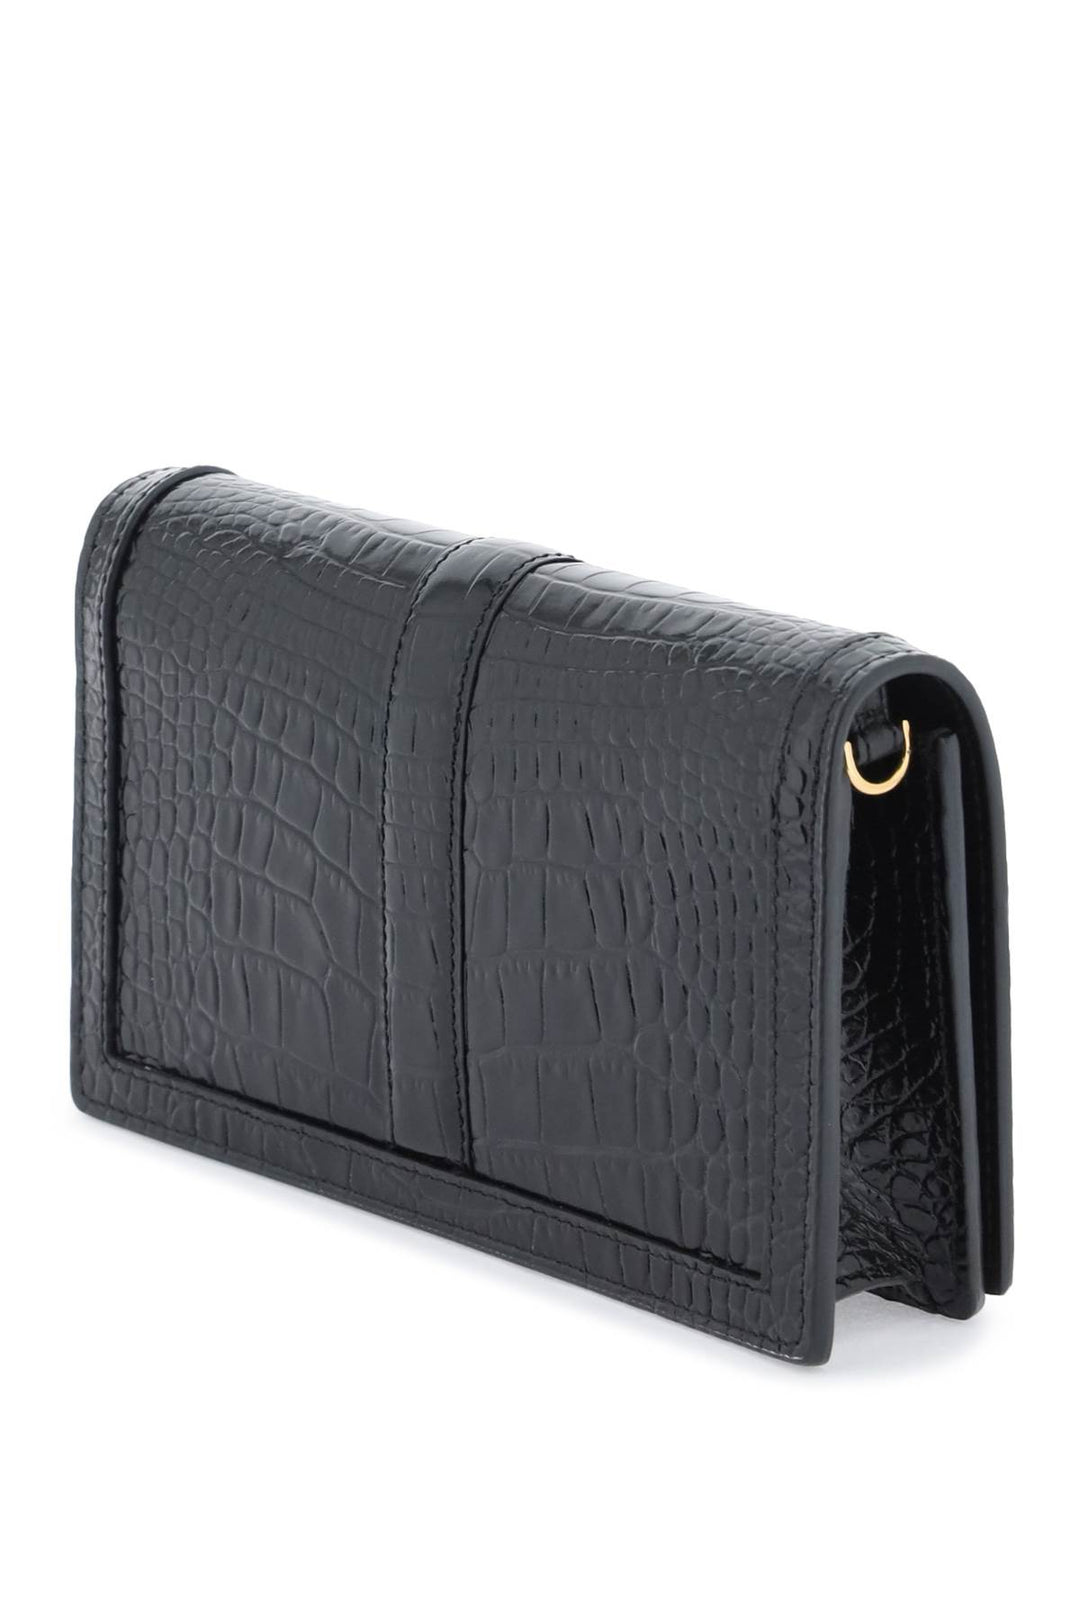 Versace Croco Embossed Leather Greca Goddes Crossbody Bag   Nero